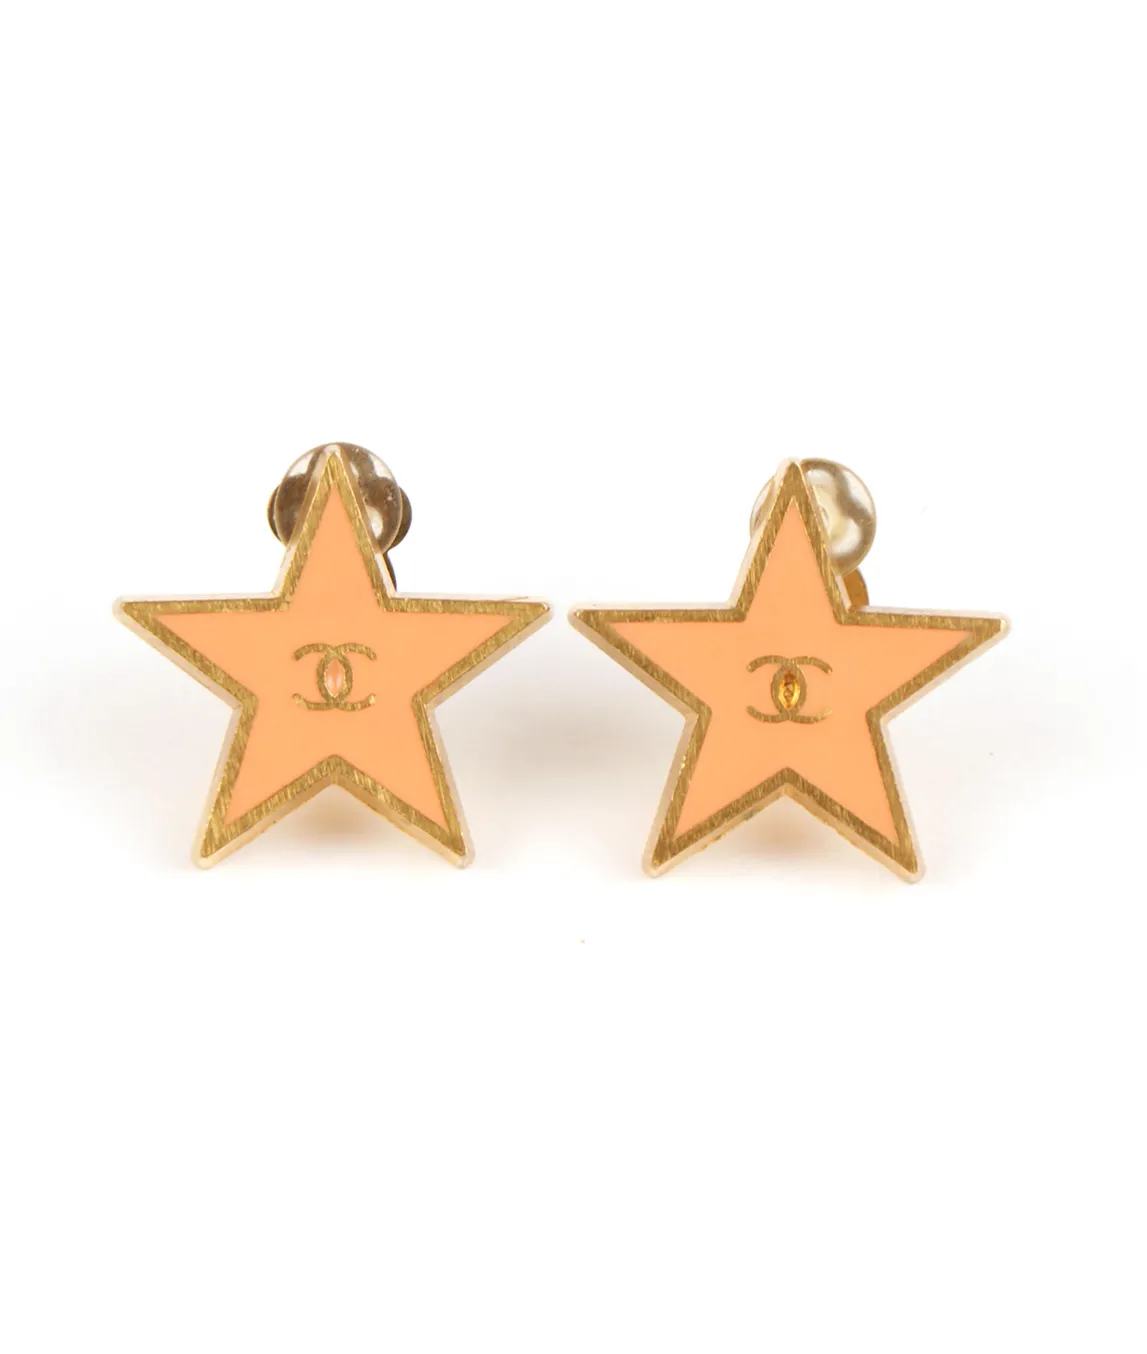 Vintage Chanel star earrings